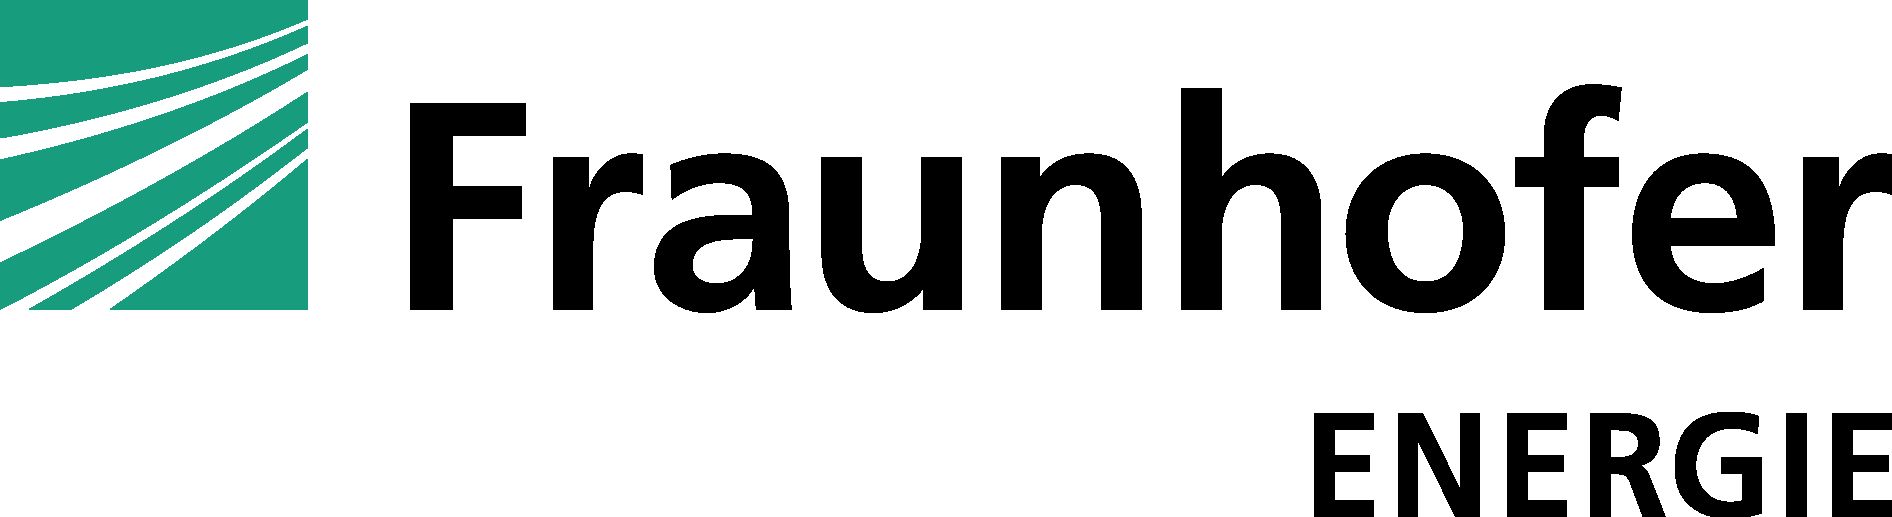 Fraunhofer Allianz Energie Logo Vector